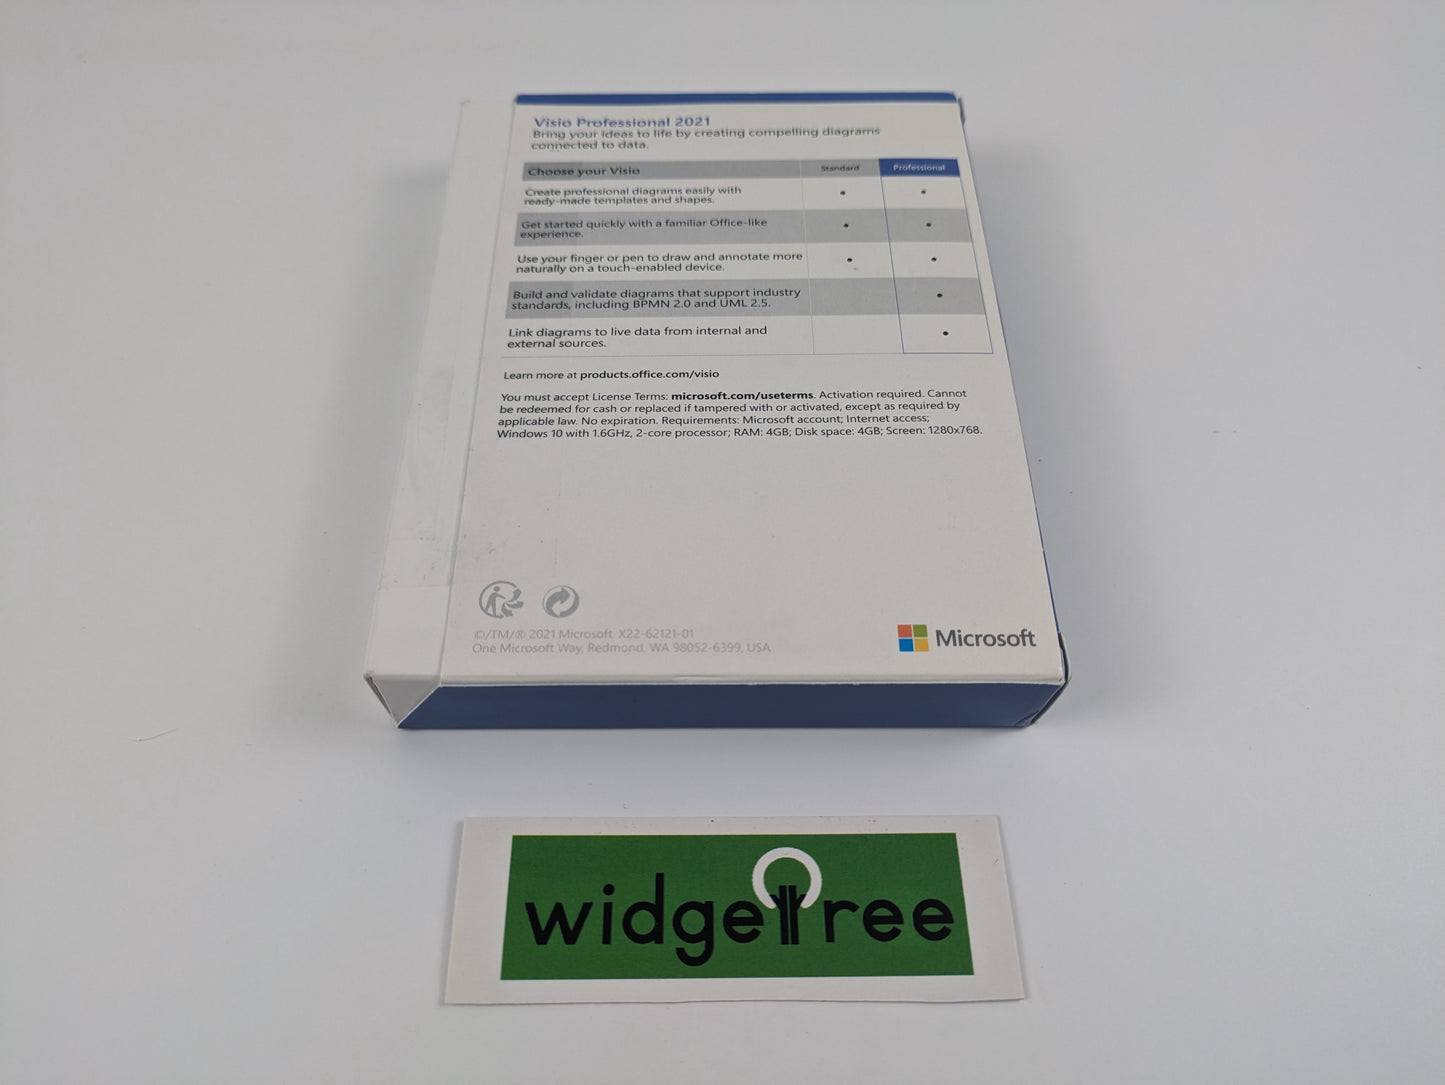 Microsoft Visio Professional 2021/Windows 10 Product Key Card - D87-07619 Used